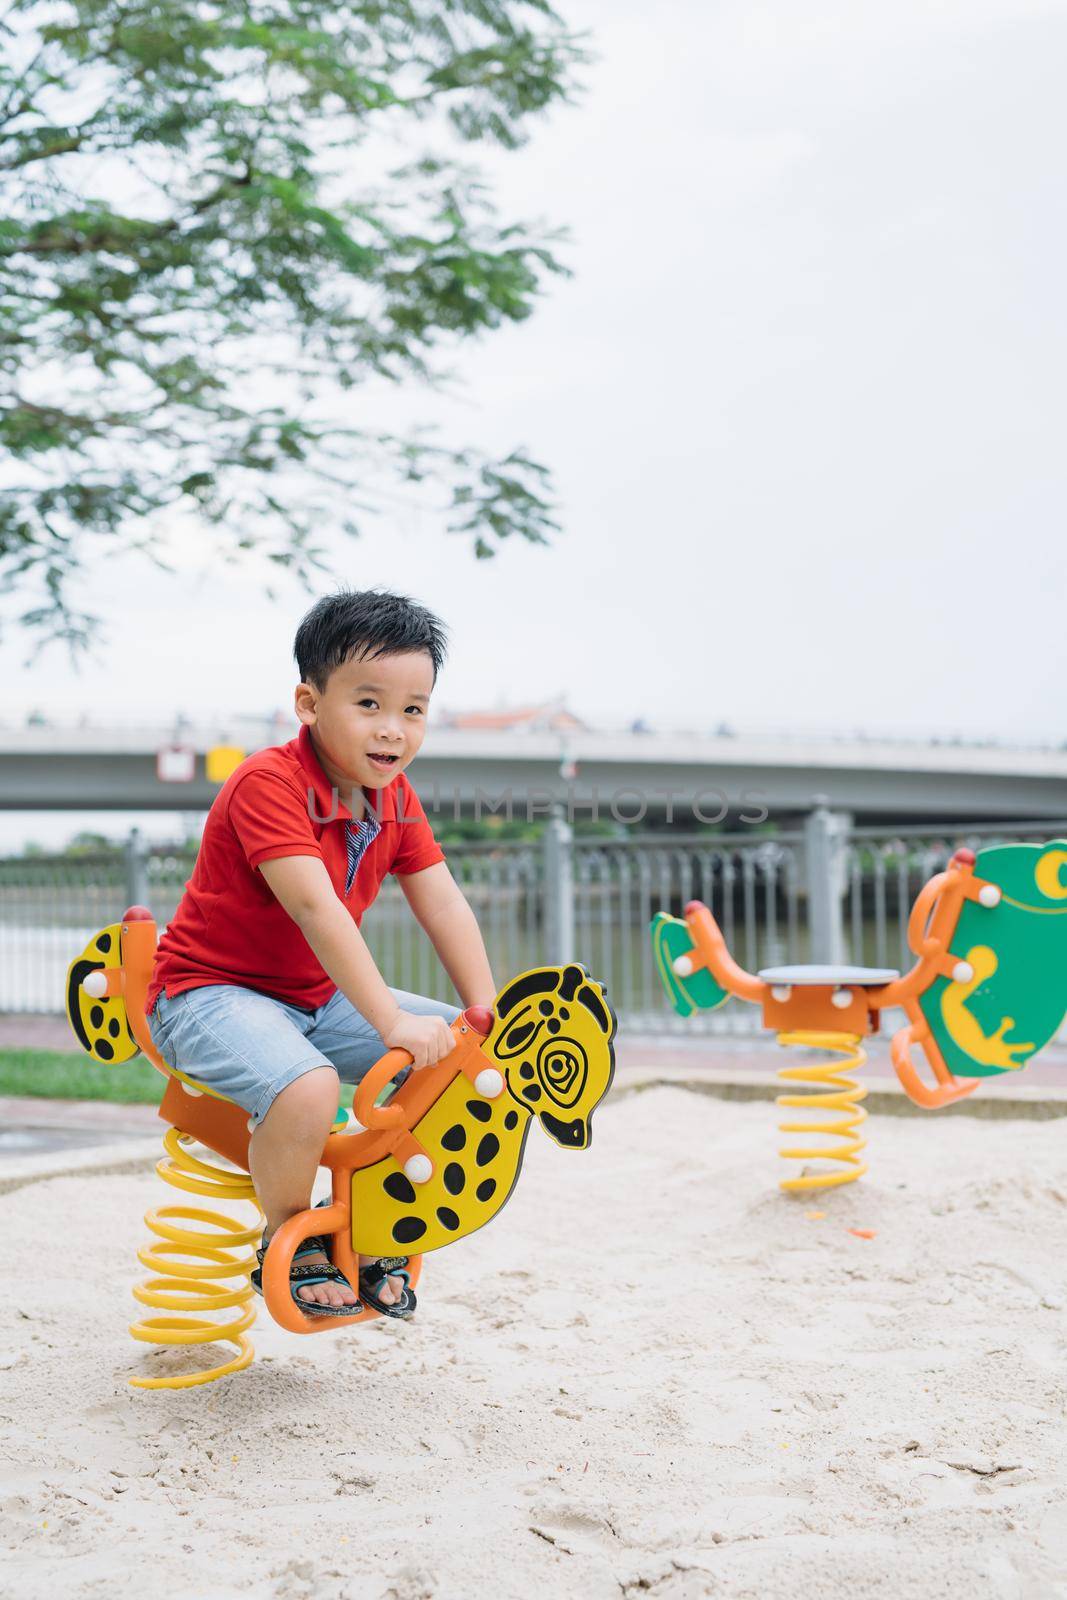 children playing on playground in summer outdoor park